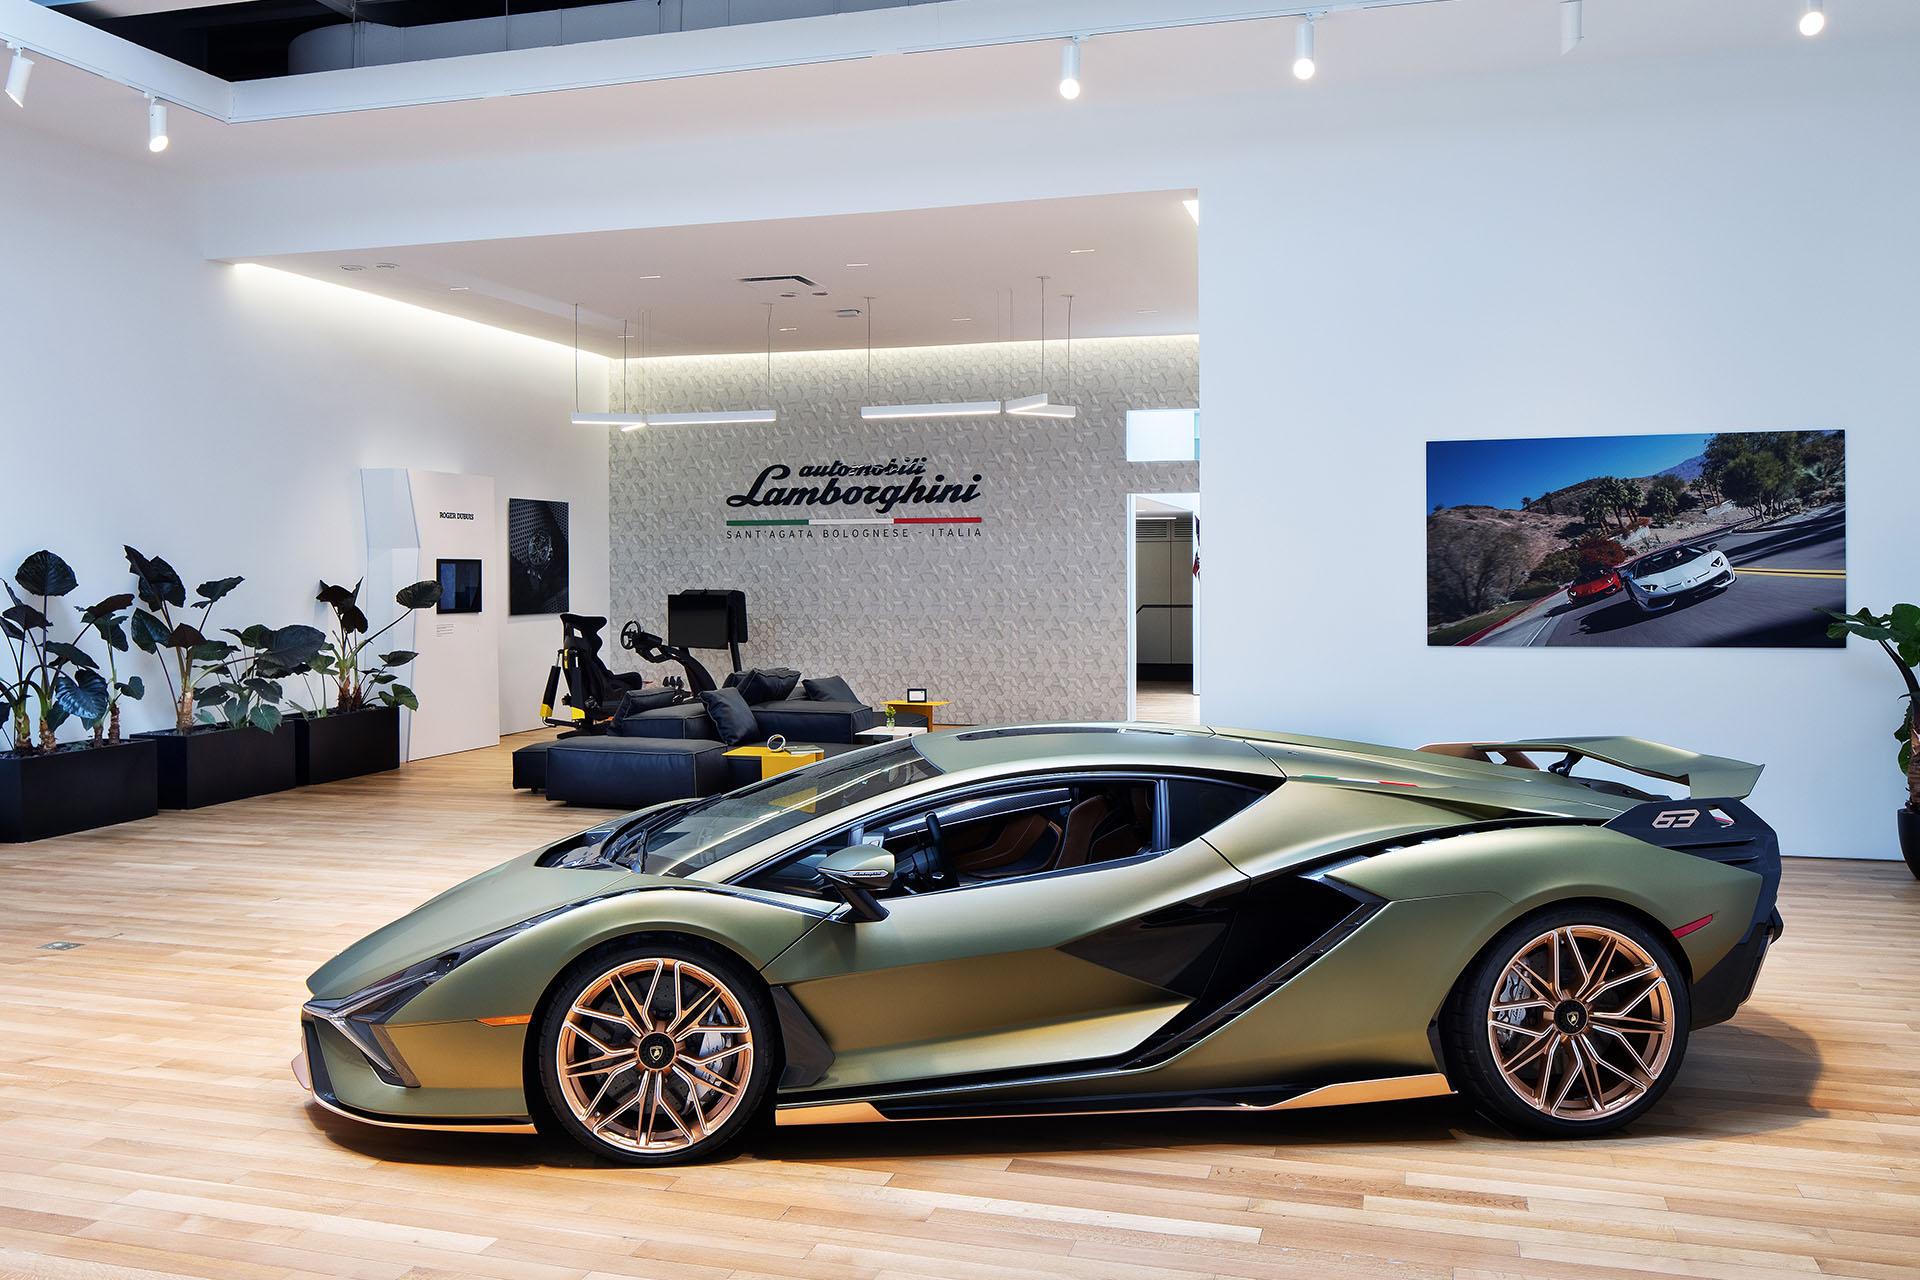 Lamborghini vip lounge new york 5